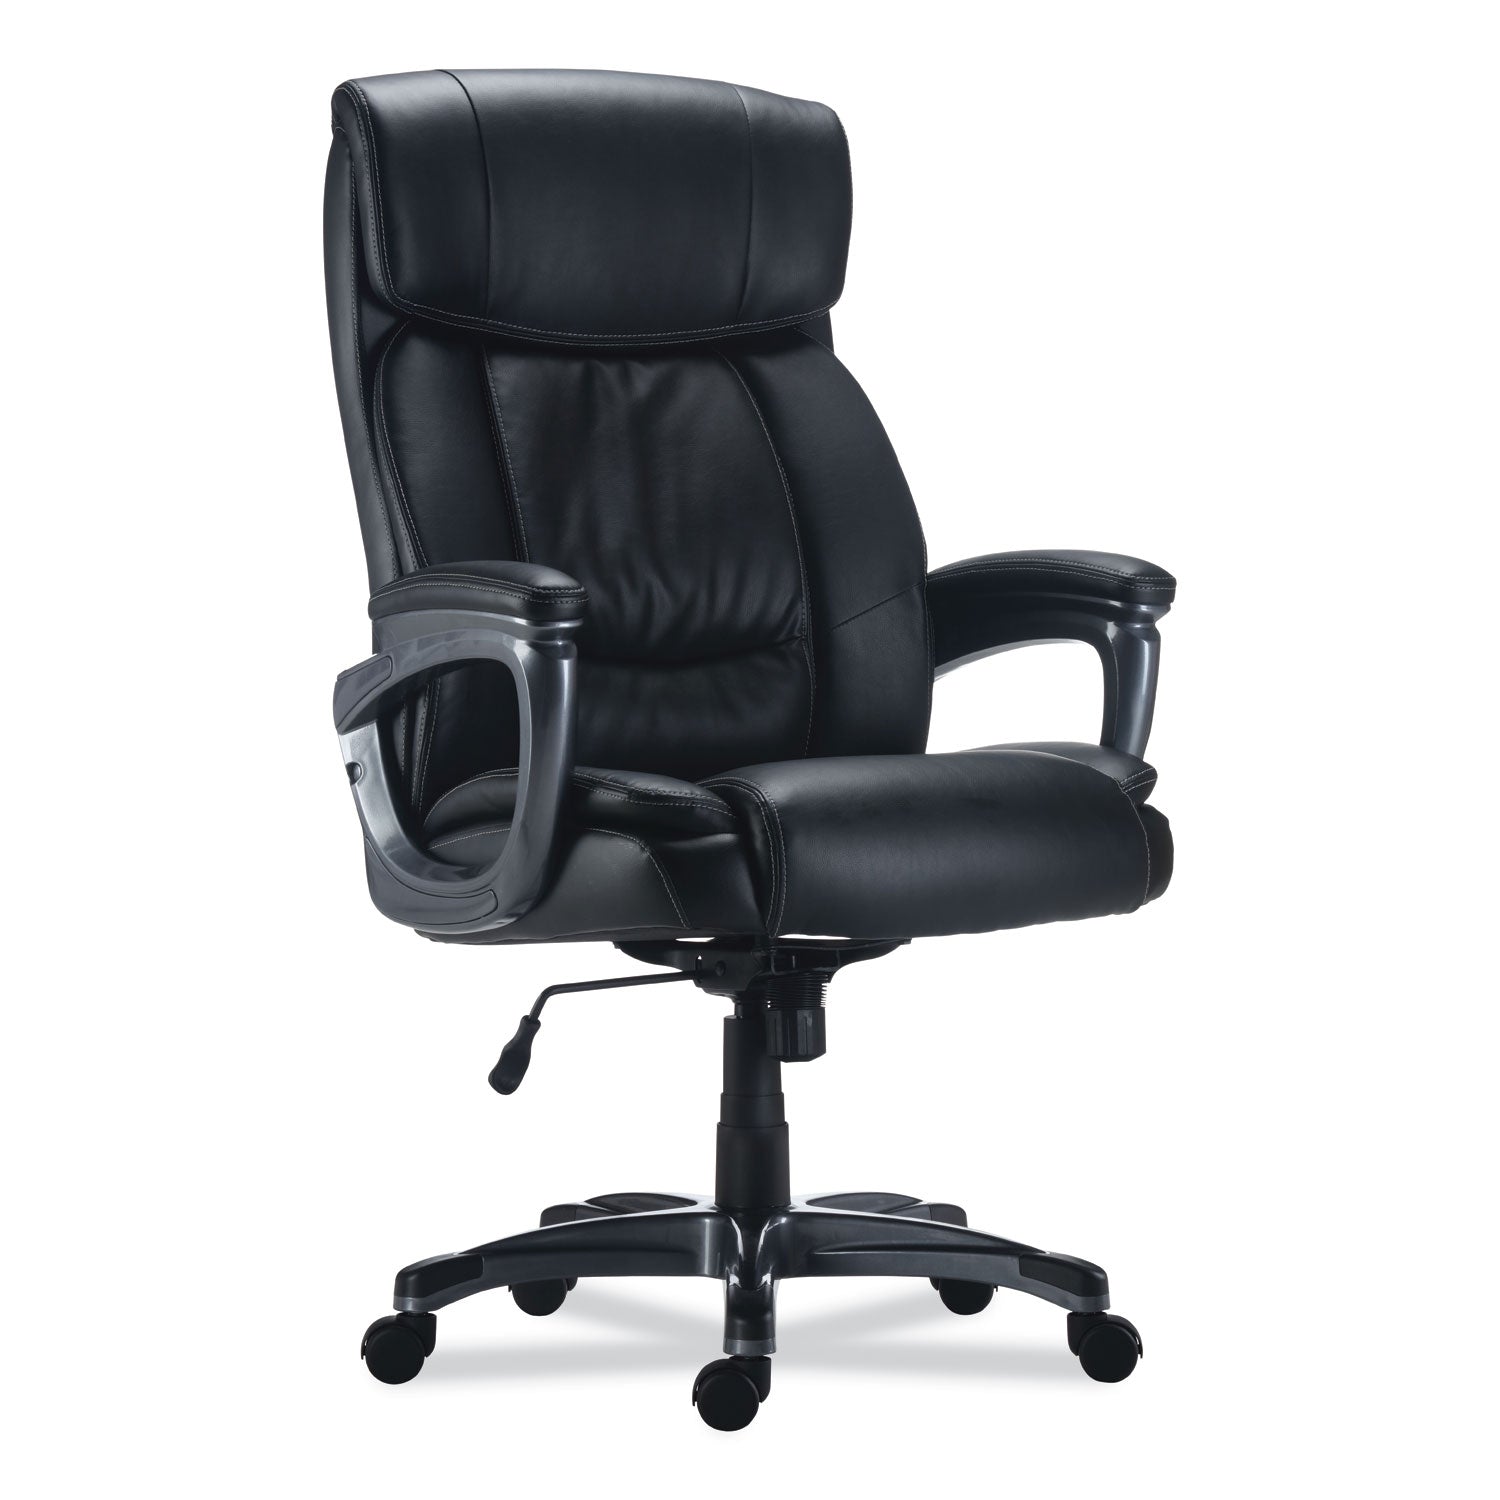 Alera Egino Big and Tall Chair, Supports Up to 400 lb, Black Seat/Back, Black Base - 3